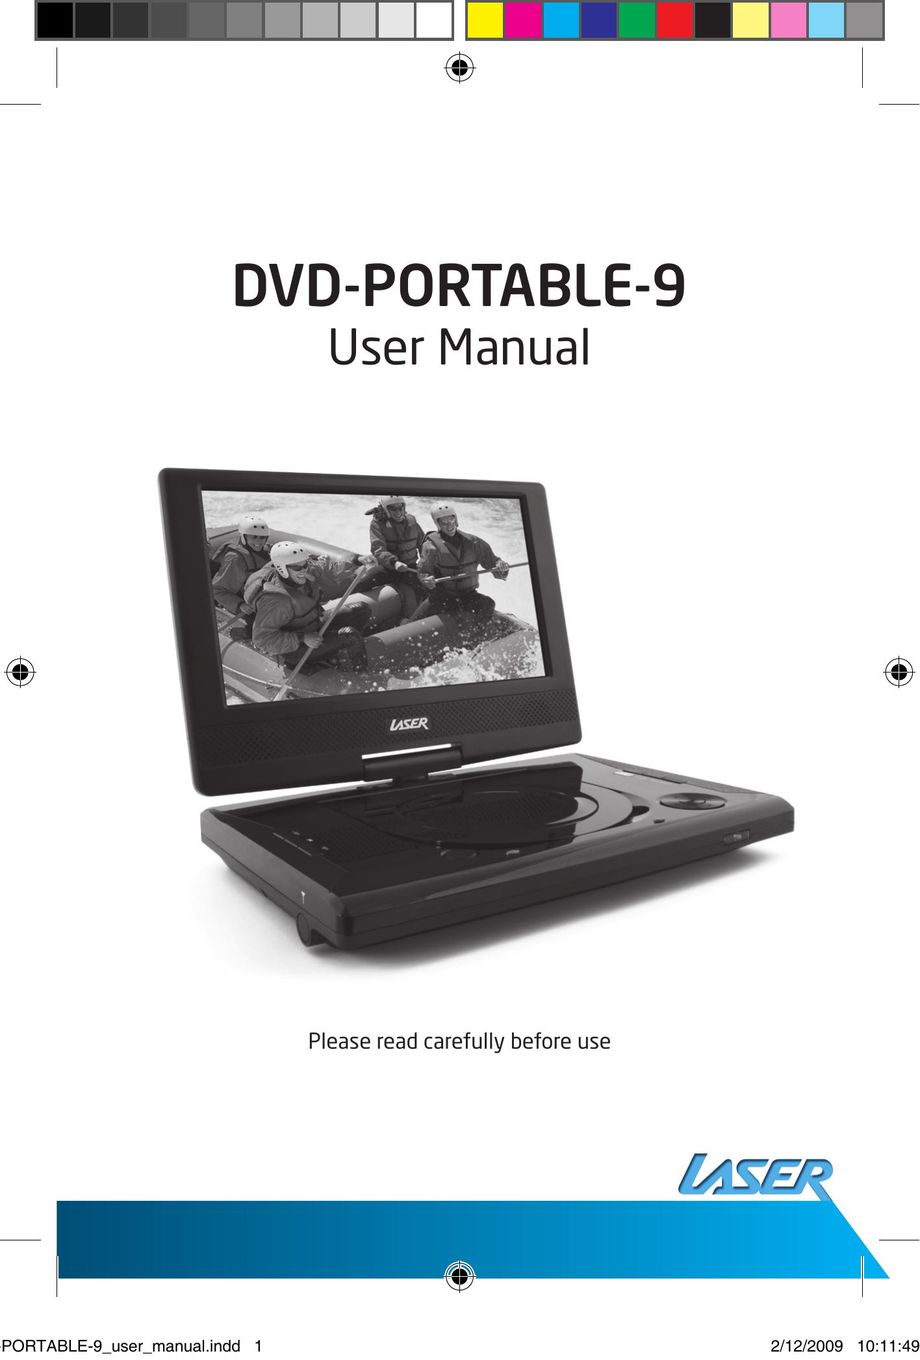 Laser DVD-PORTABLE-9 Portable DVD Player User Manual